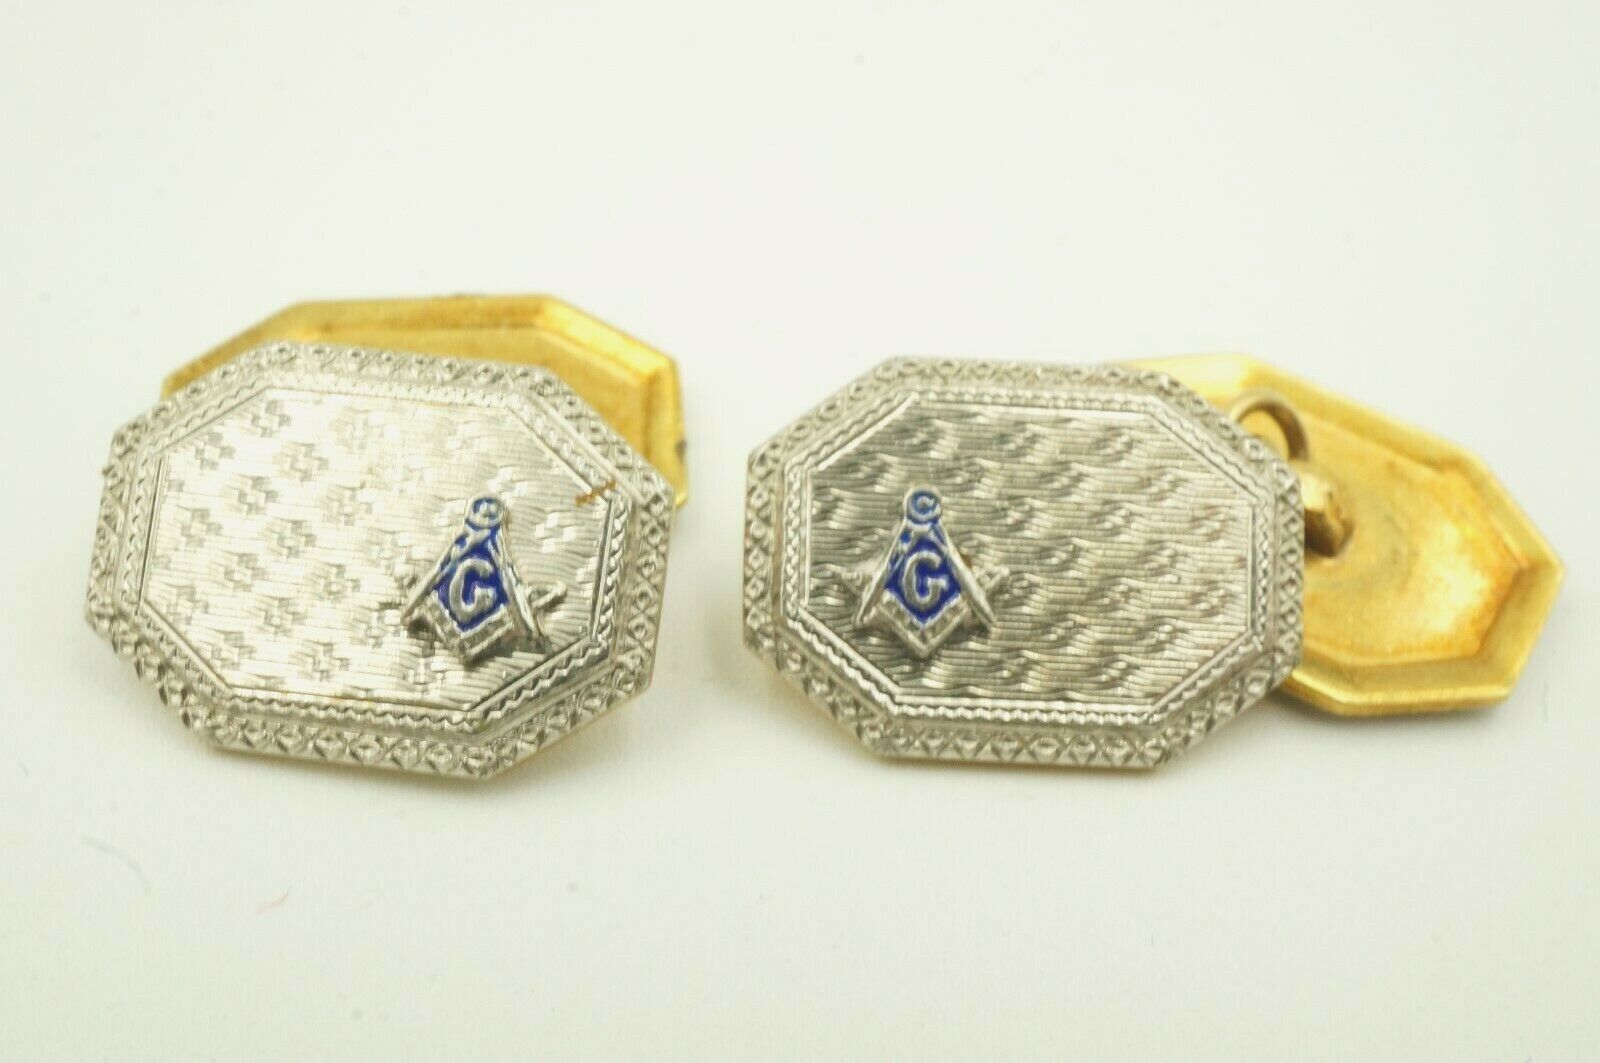 Vintage 14k White And Yellow Gold Enamel Masonic Patterned Cufflinks